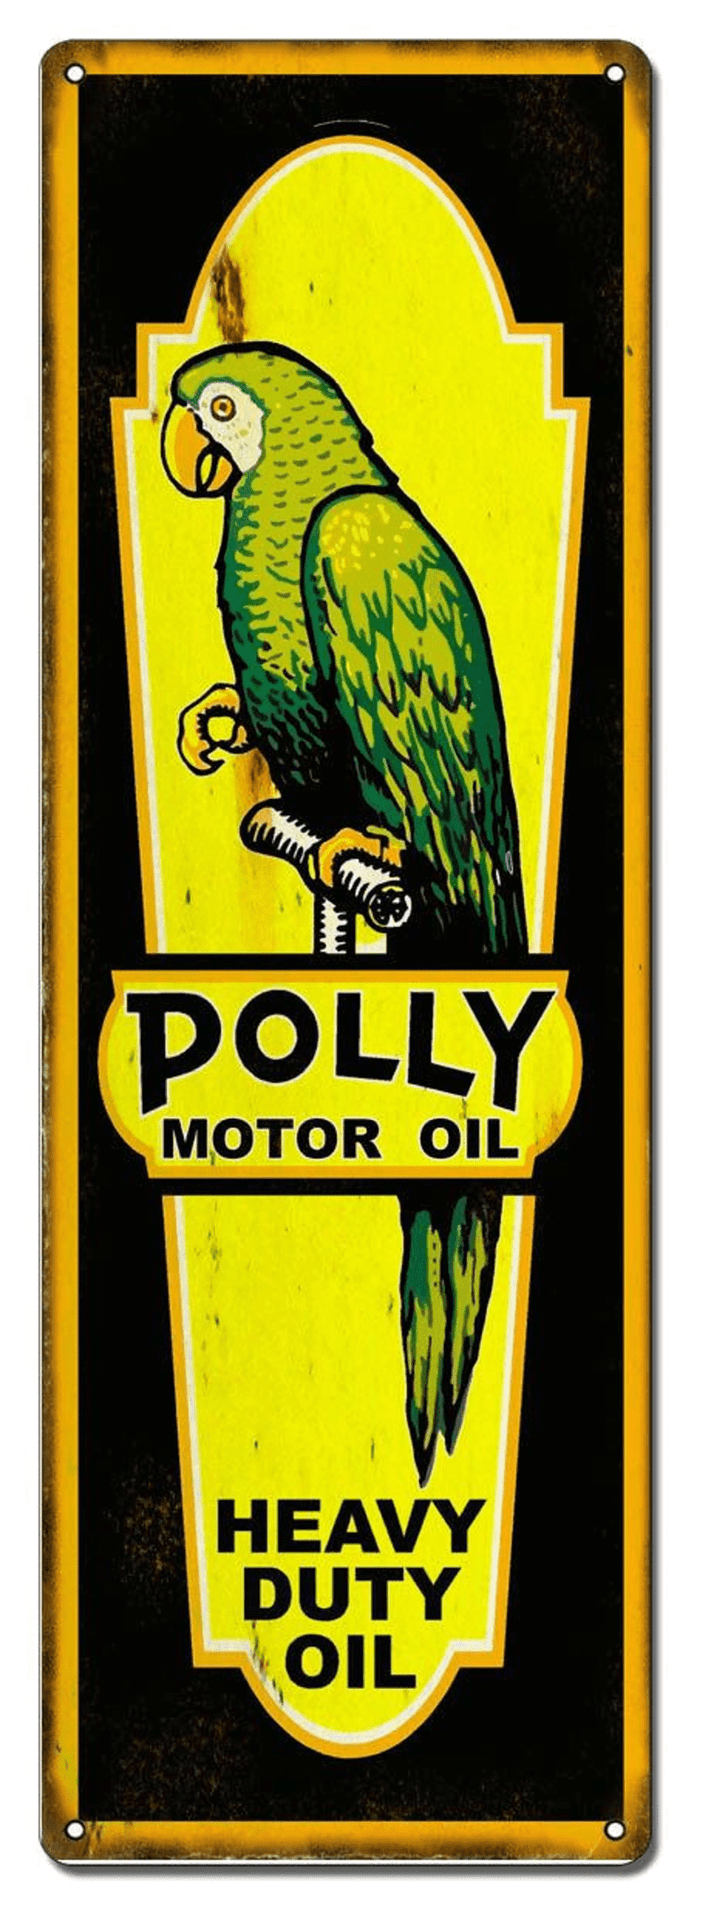 Polly Motor Oil Vintage Style 8 x 24 inch .040 Gauge Metal Sign Vintage Style Retro Garage Art RG6141L